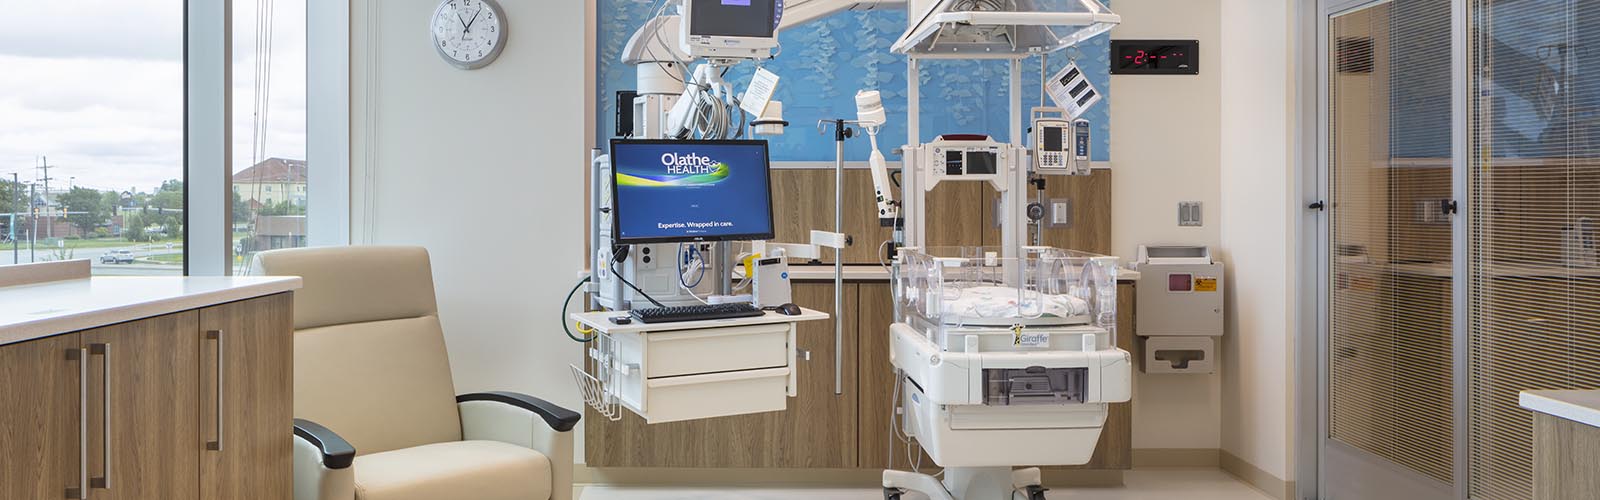 Olathe Medical Center - OB/NICU Expansion 5